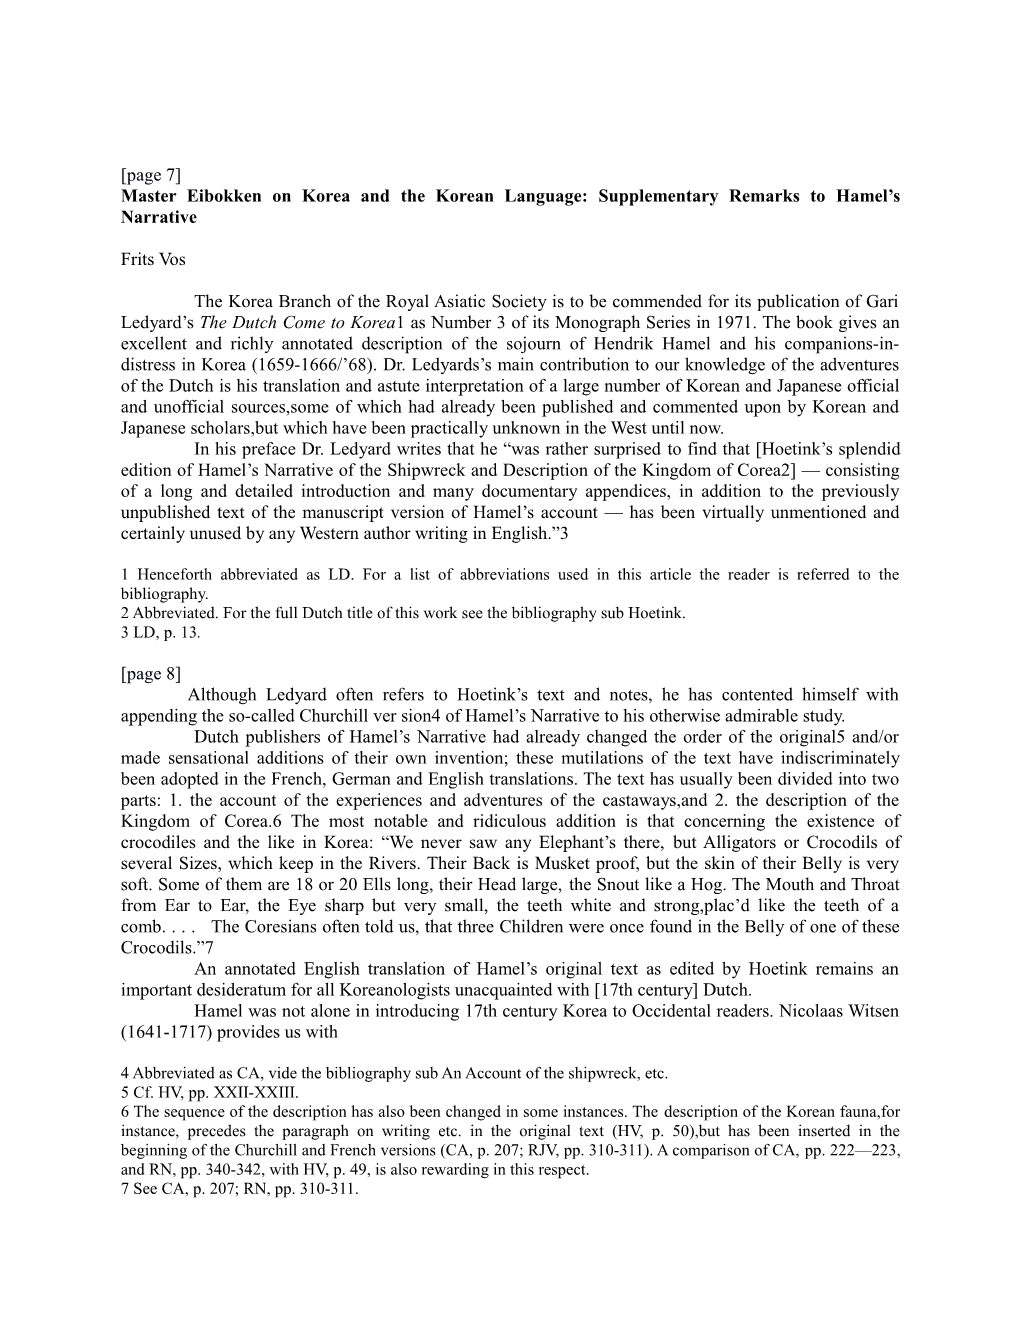 Master Eibokken on Korea Andthe Korean Language:Supplementary Remarks Tohamel S Narrative